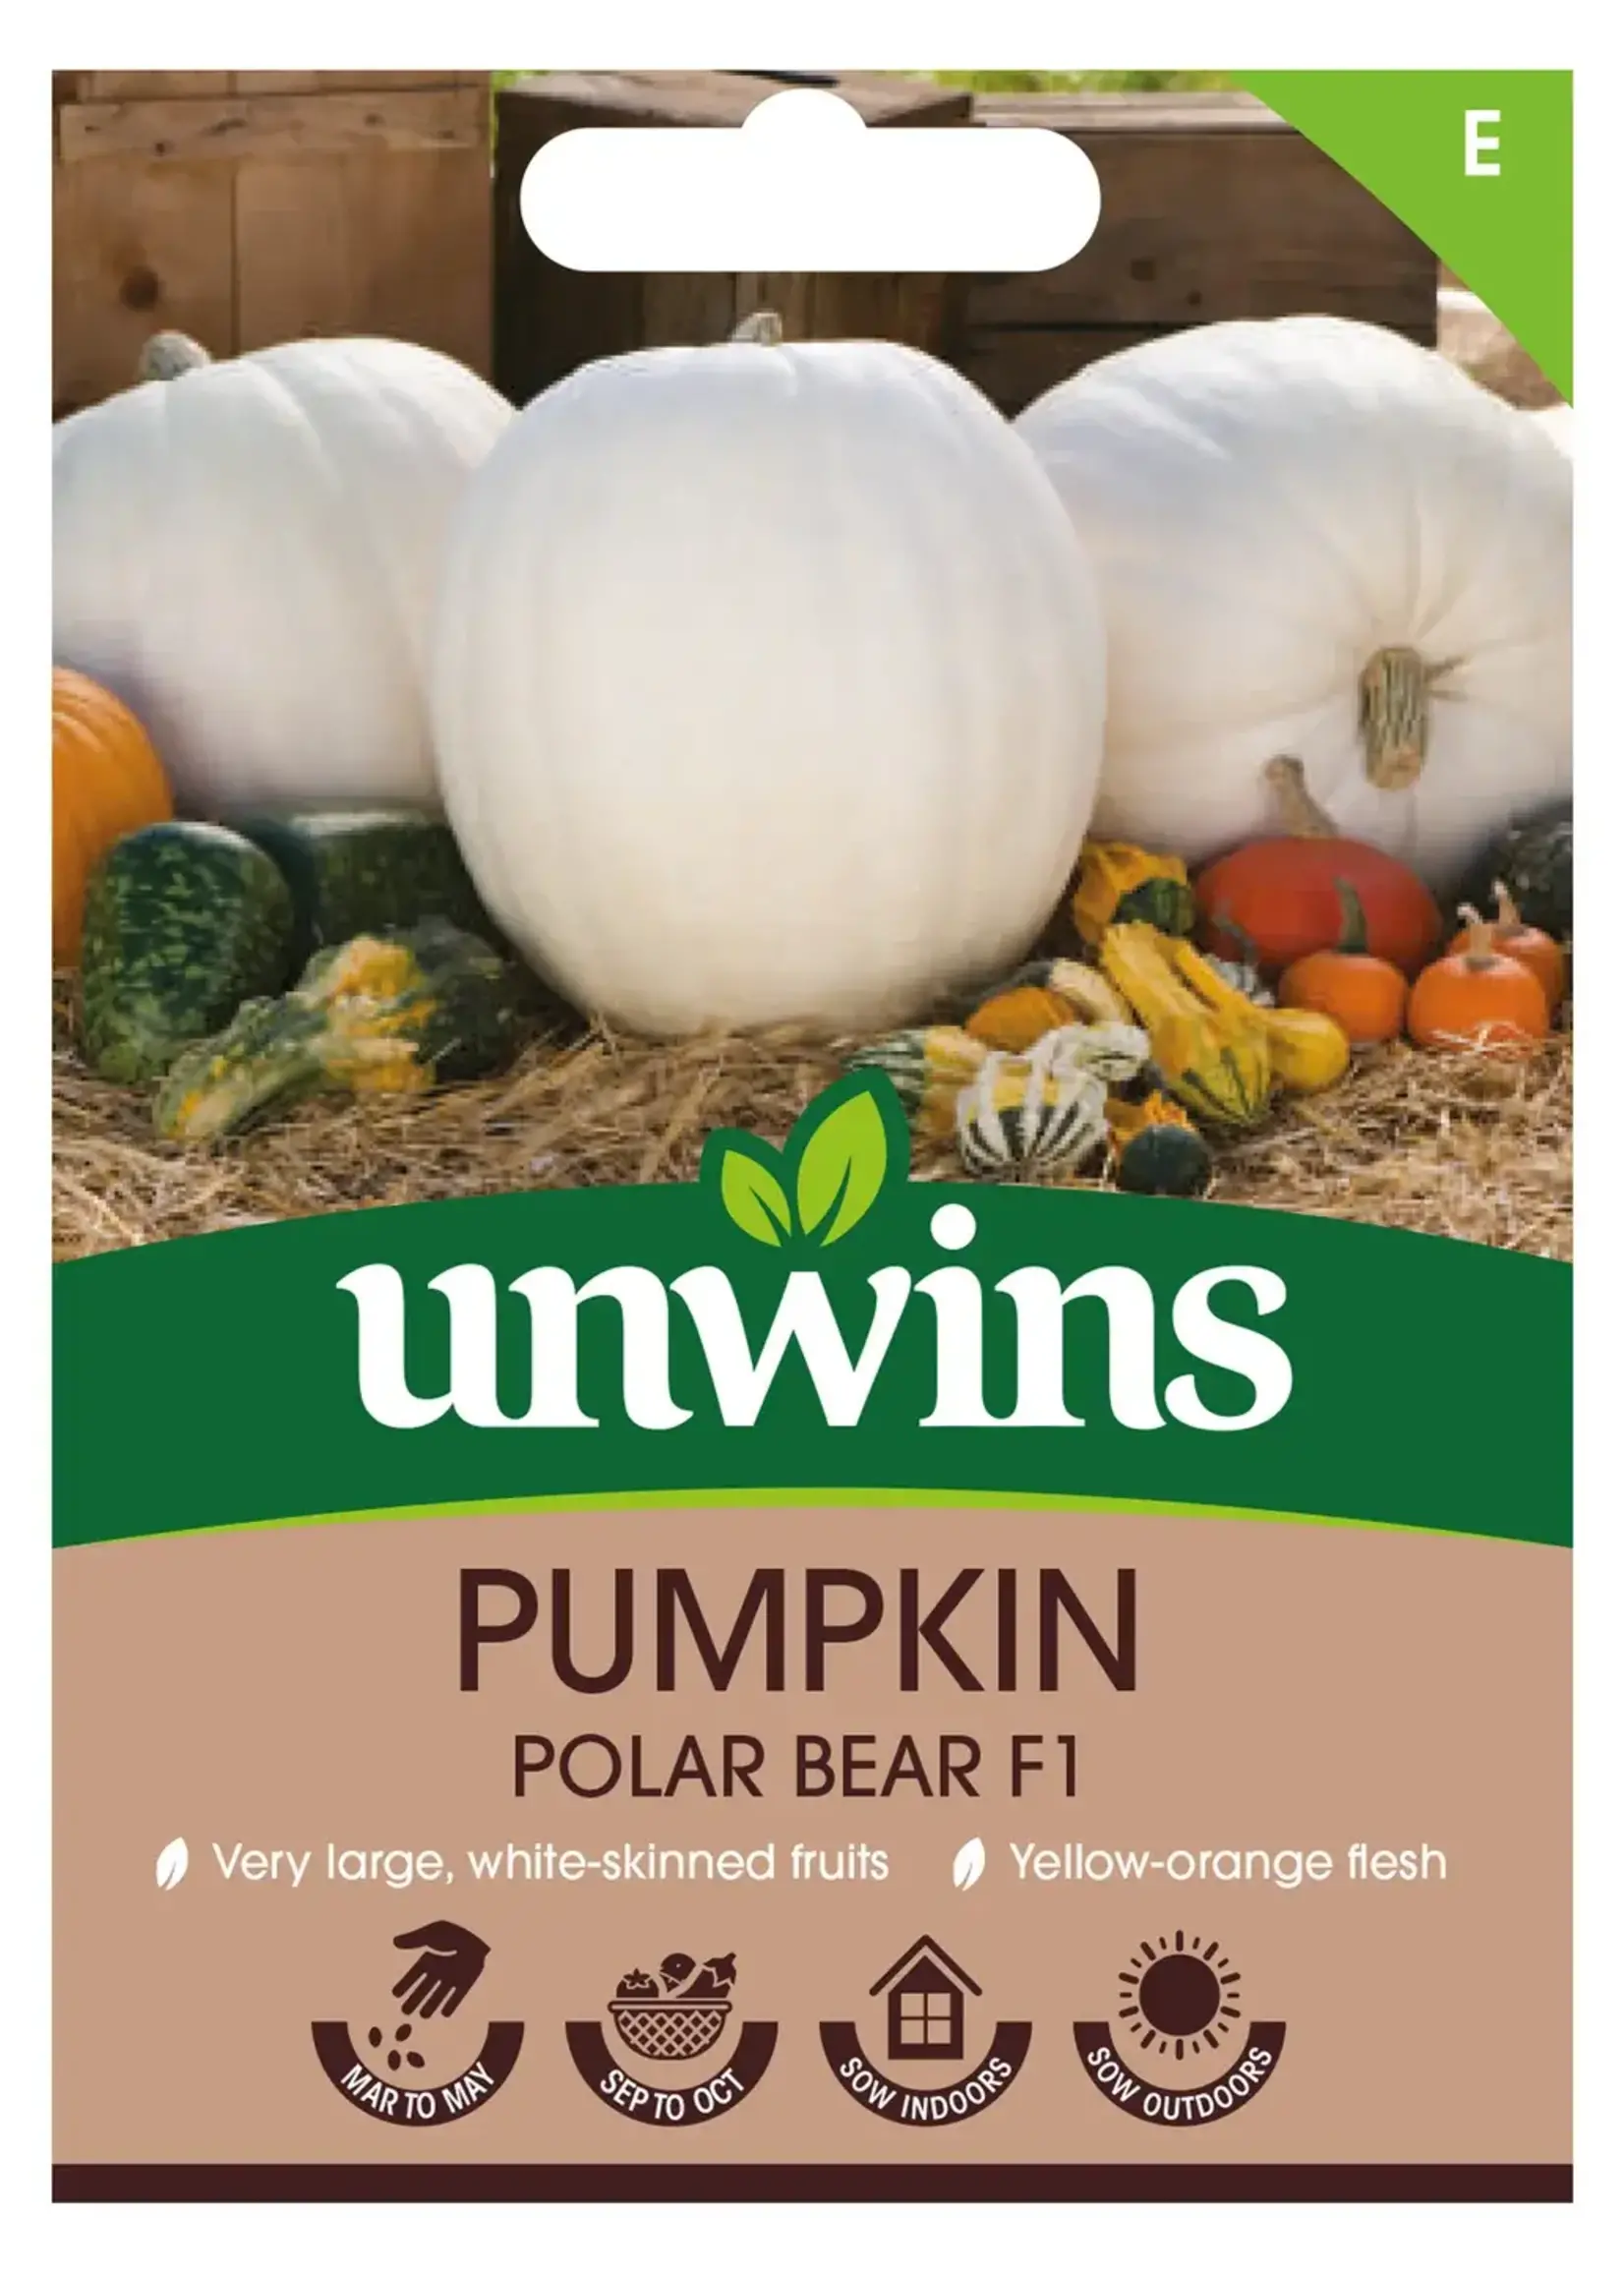 Unwins Pumpkin - Polar Bear F1